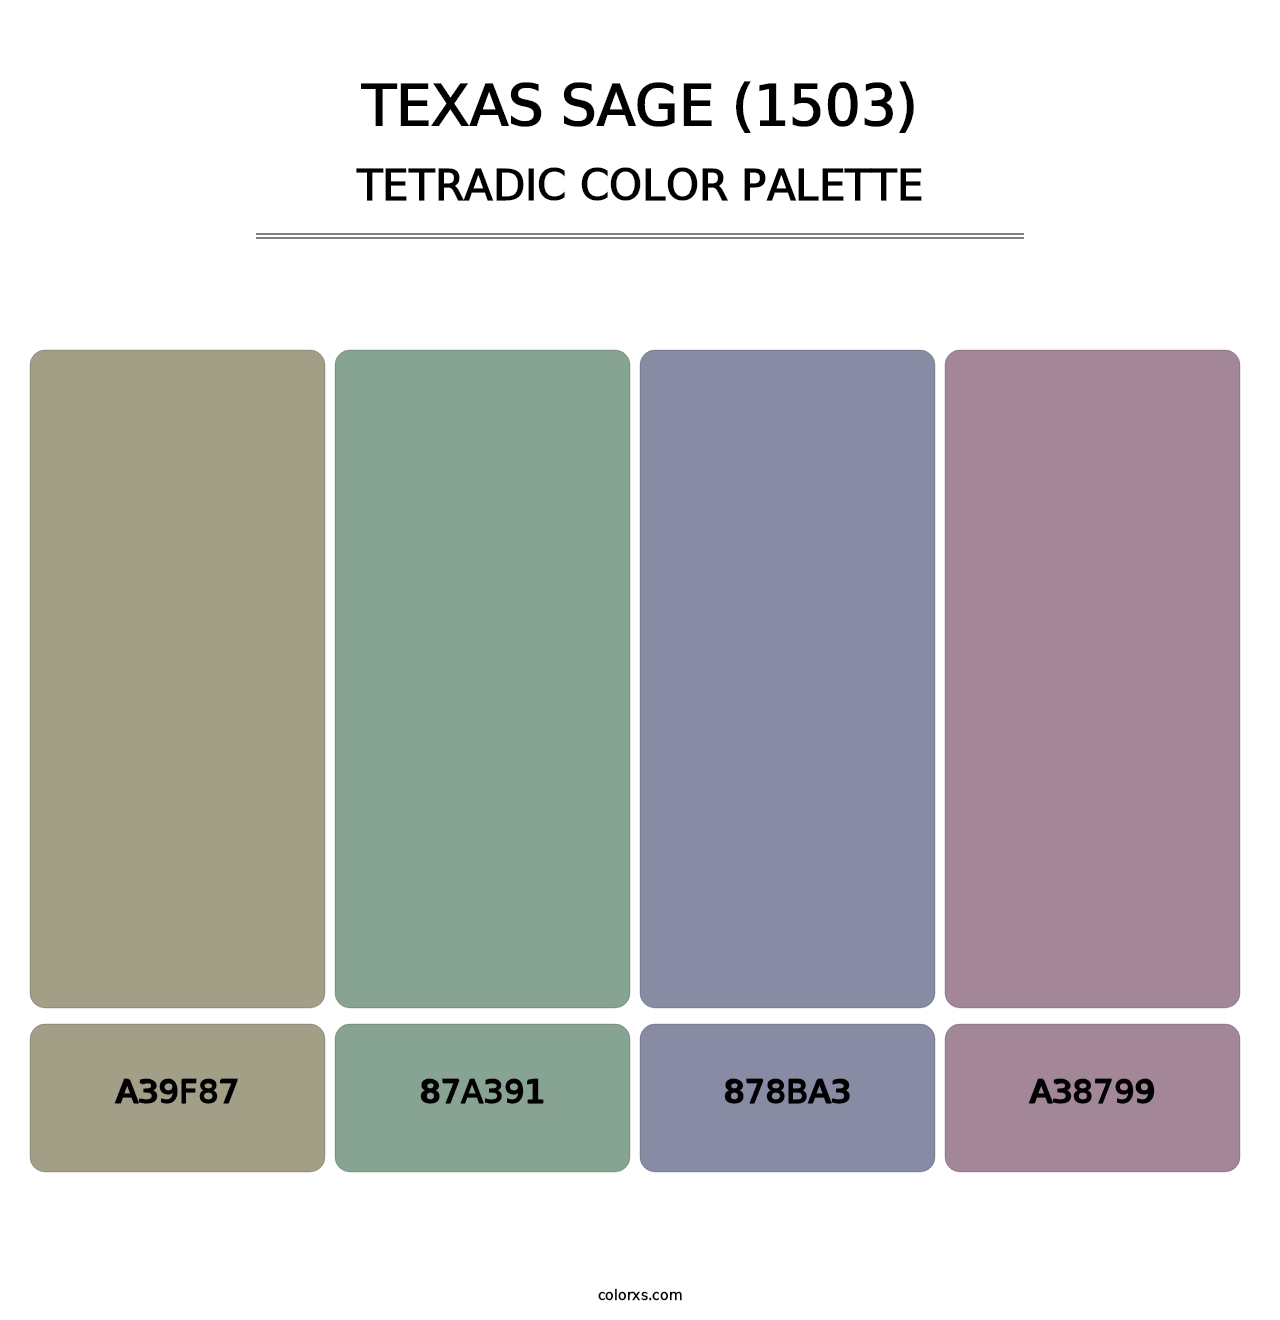 Texas Sage (1503) - Tetradic Color Palette